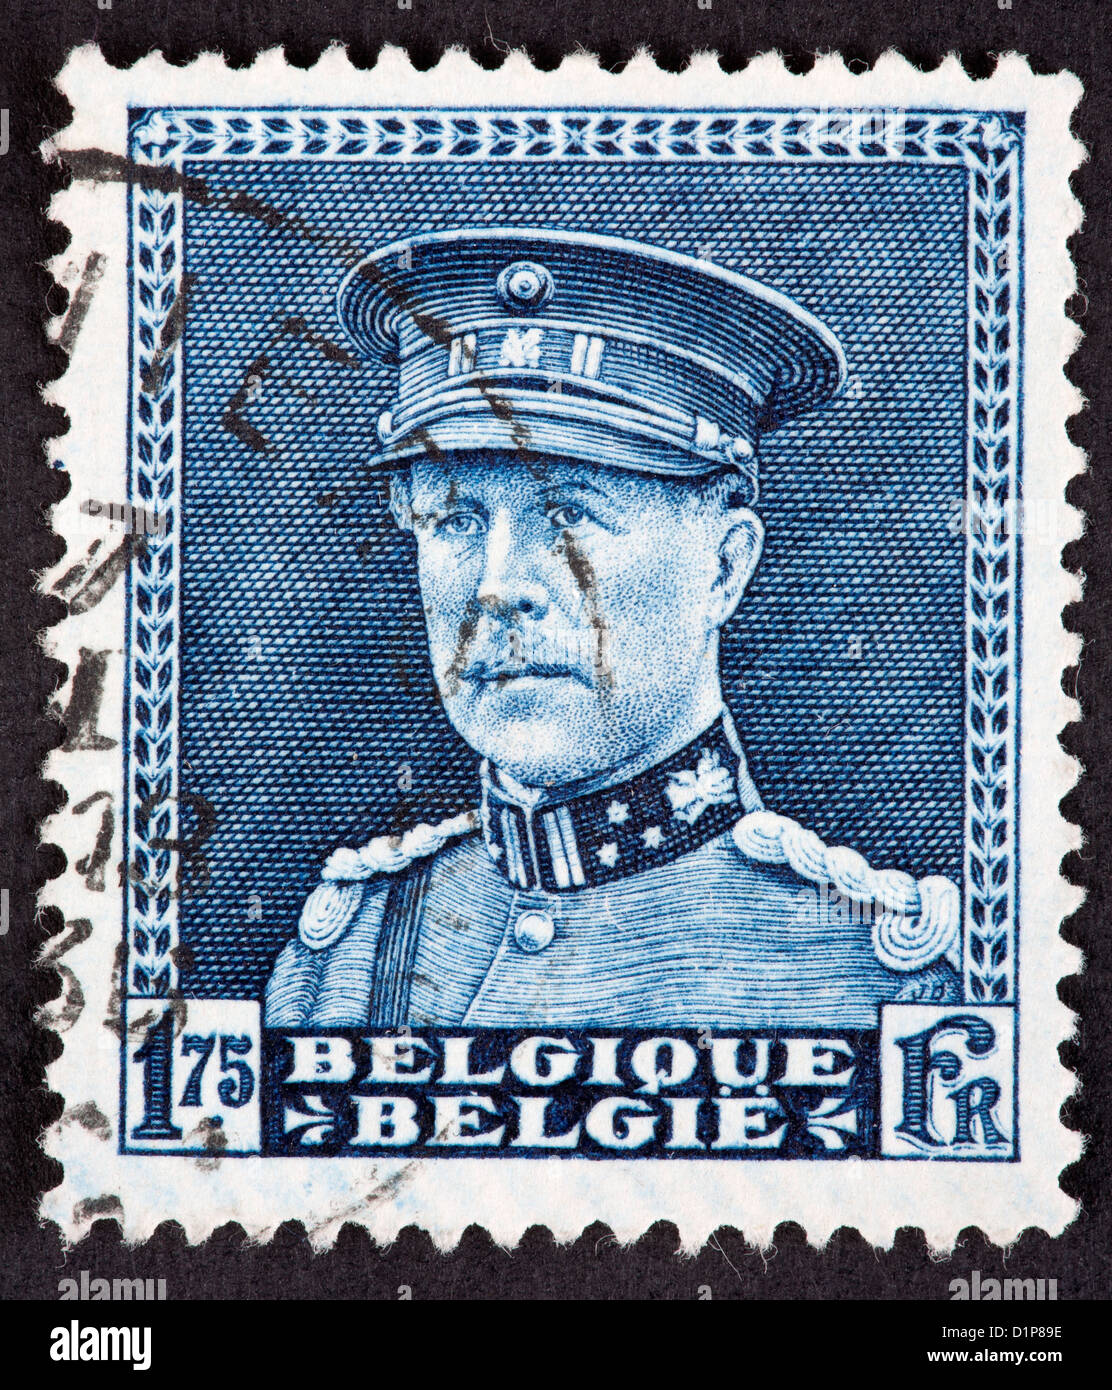 Belgian postage stamp Stock Photo